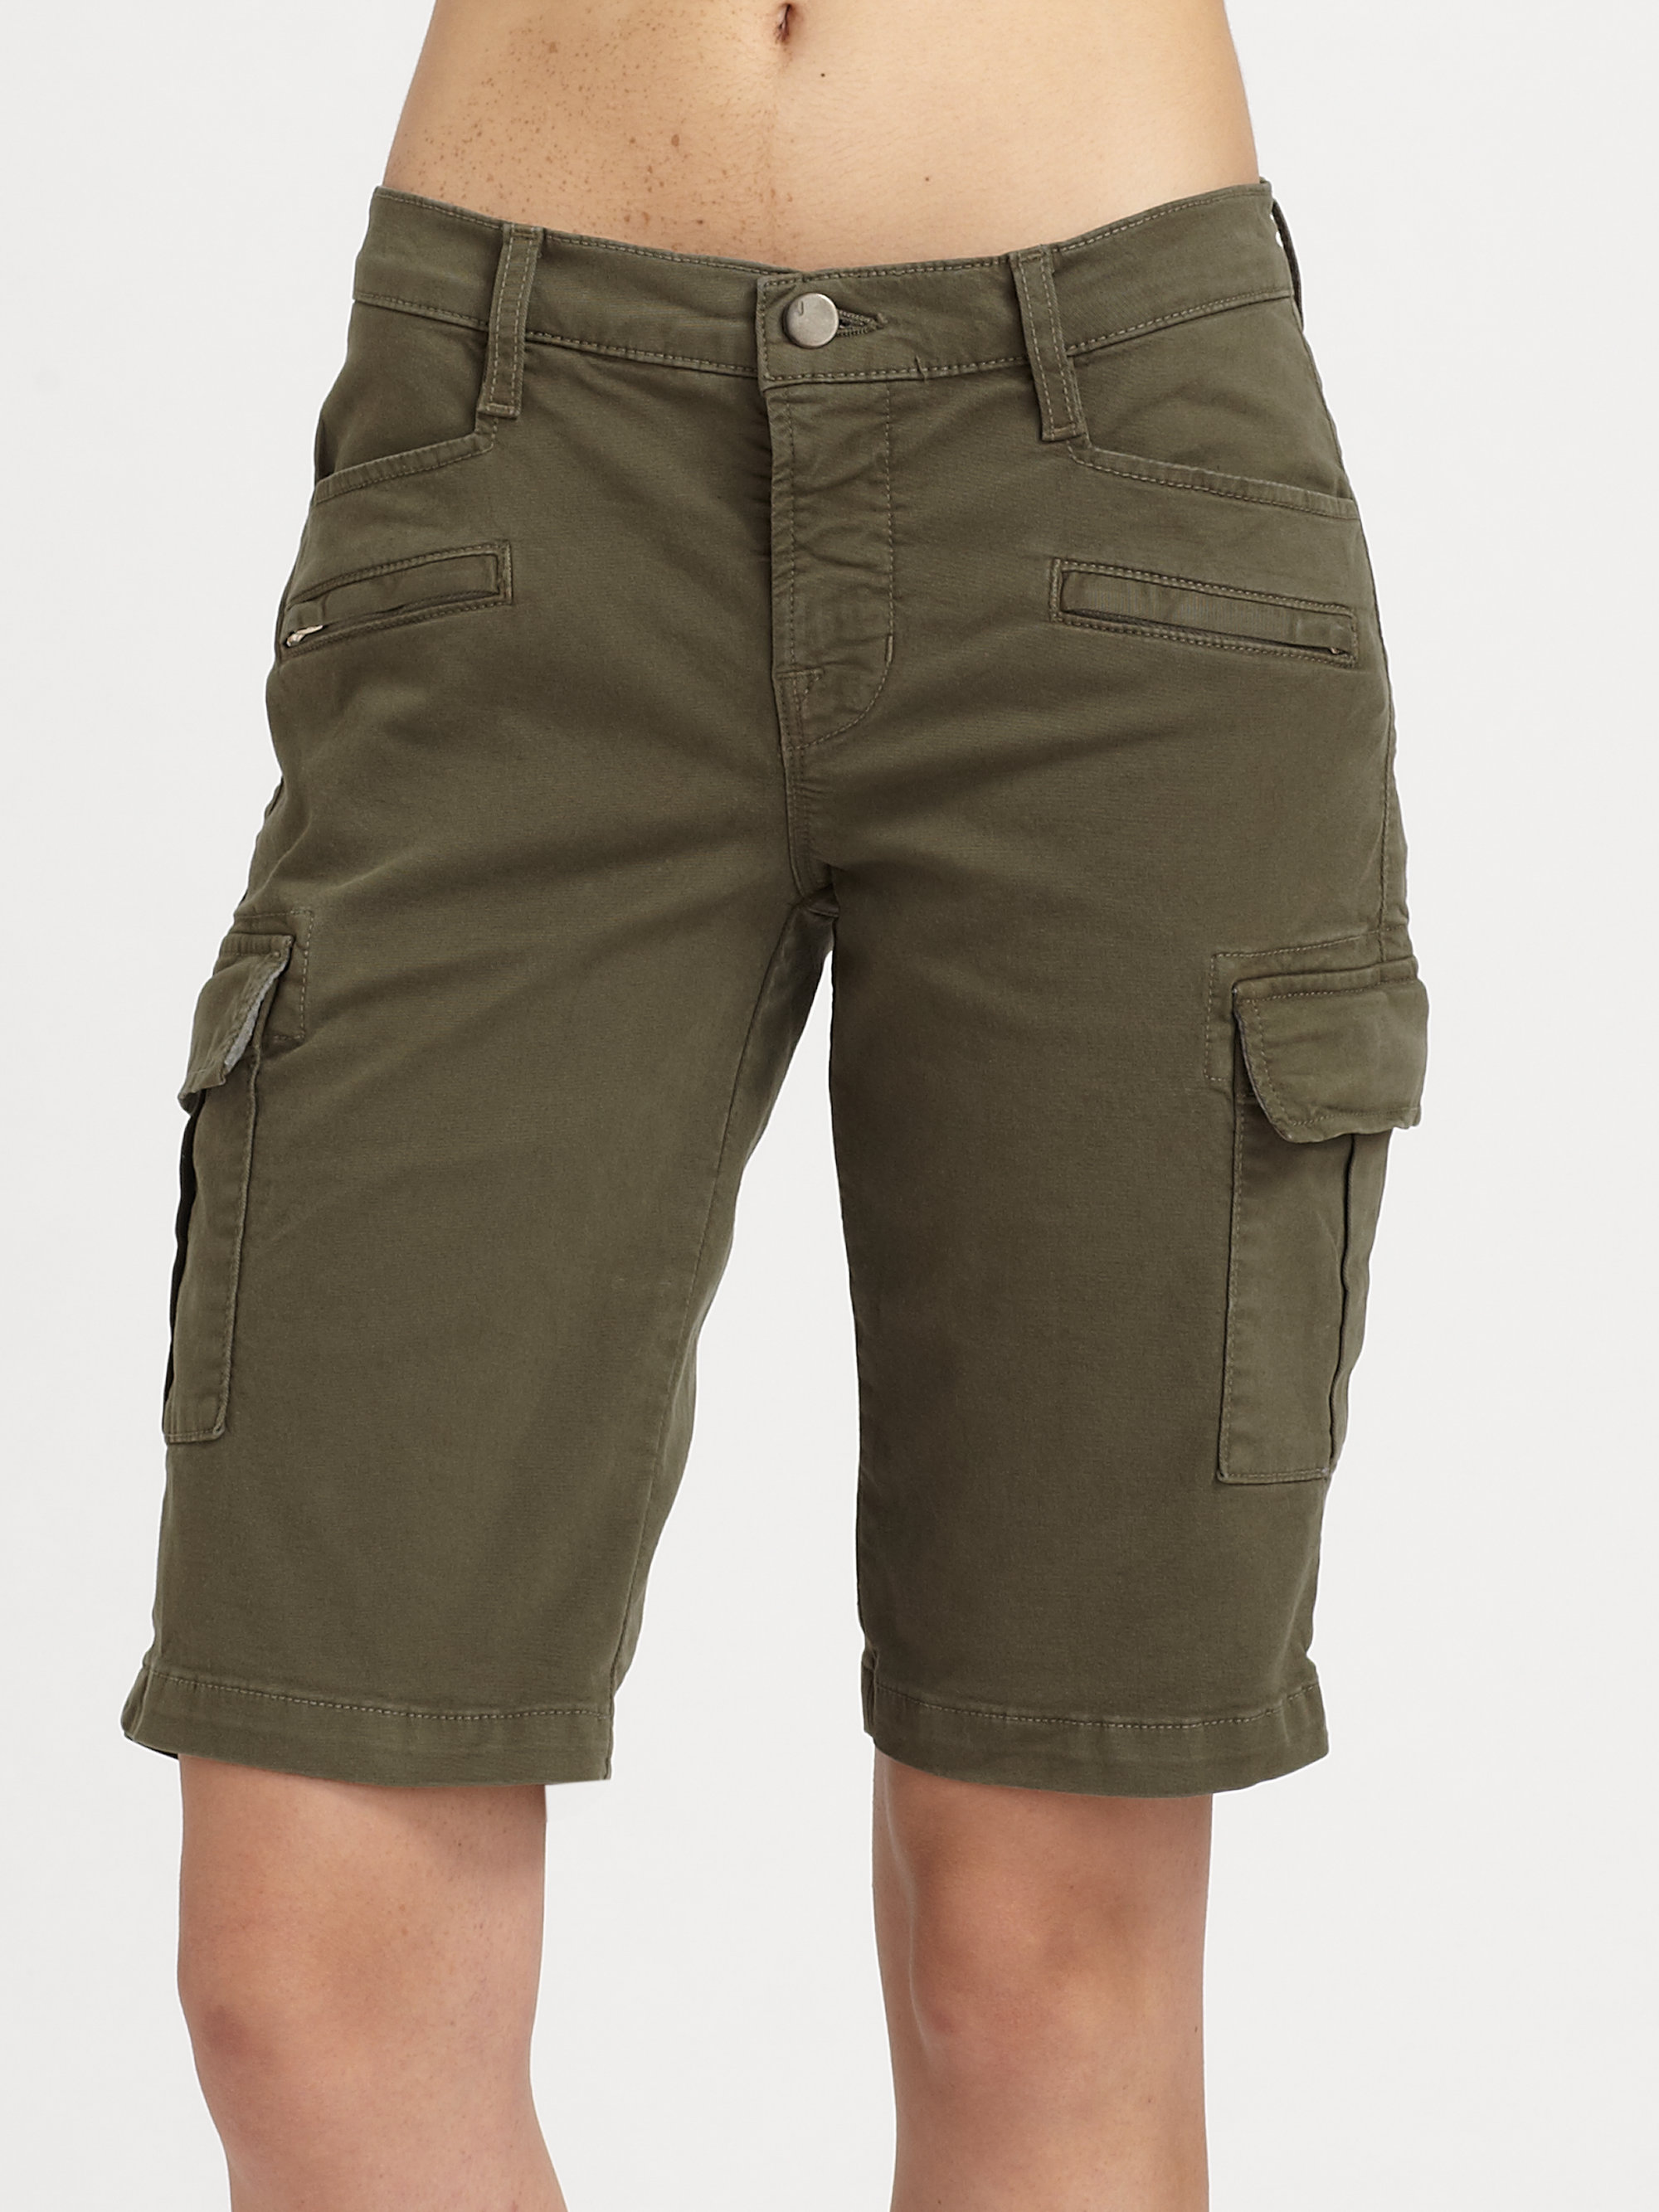 J Brand Military Cargo Shorts in Khaki (vintage) | Lyst